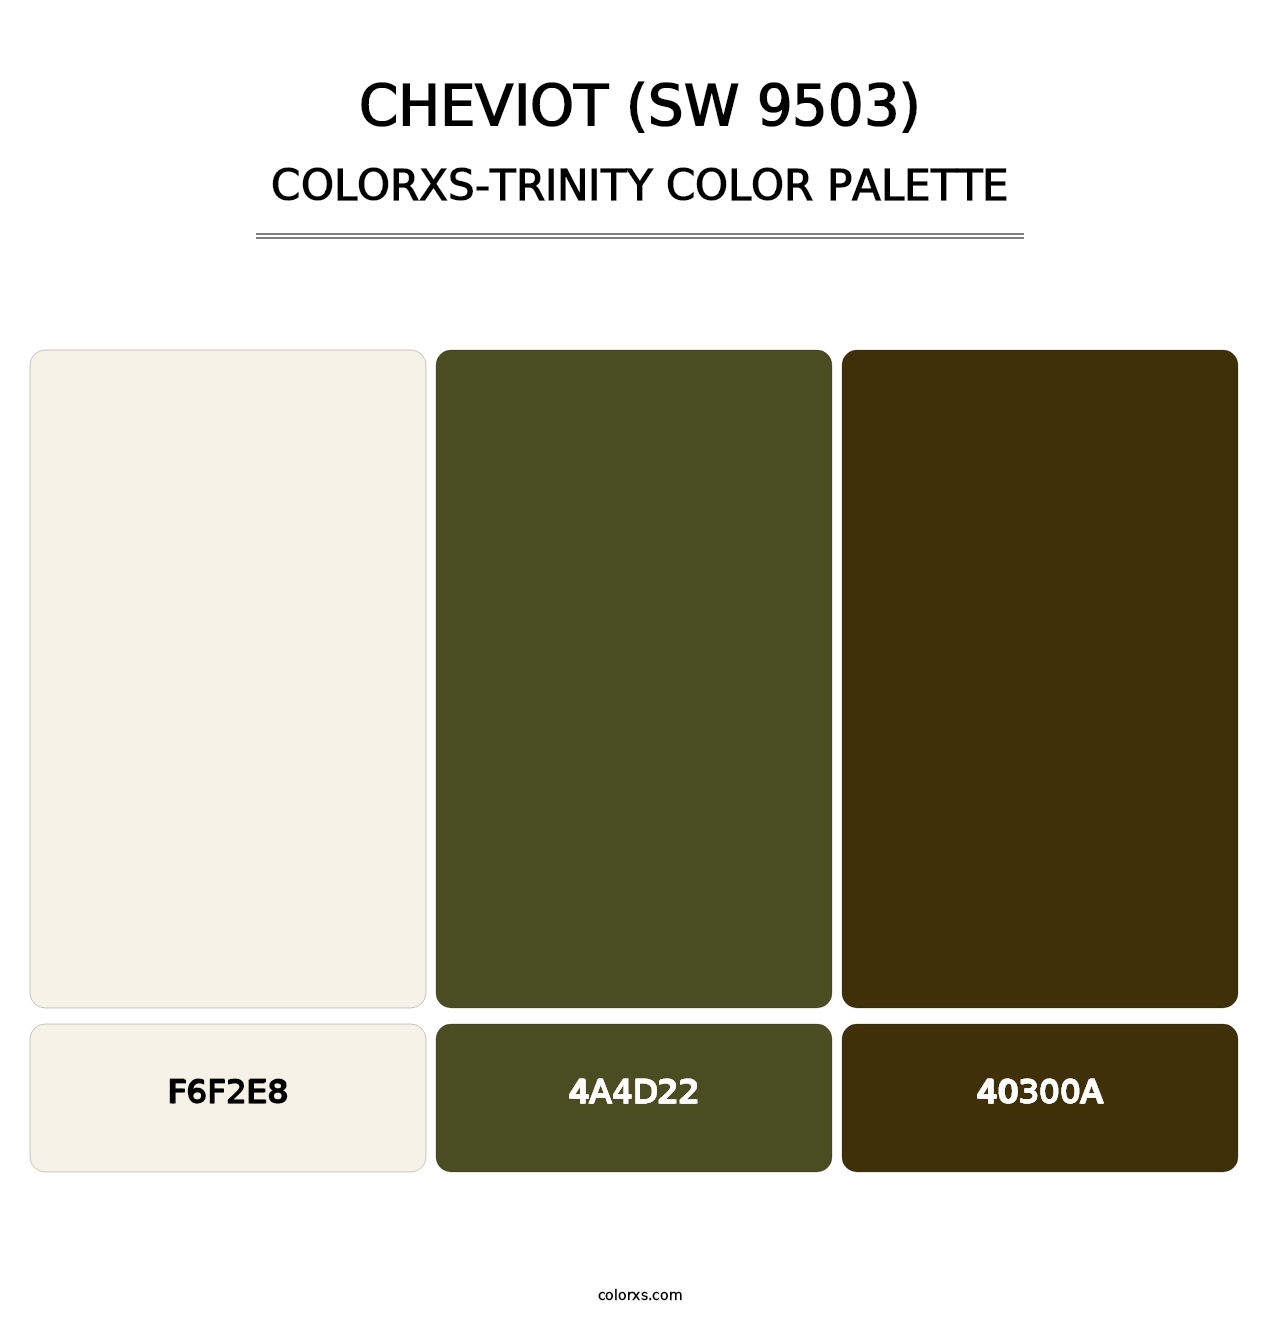 Cheviot (SW 9503) - Colorxs Trinity Palette